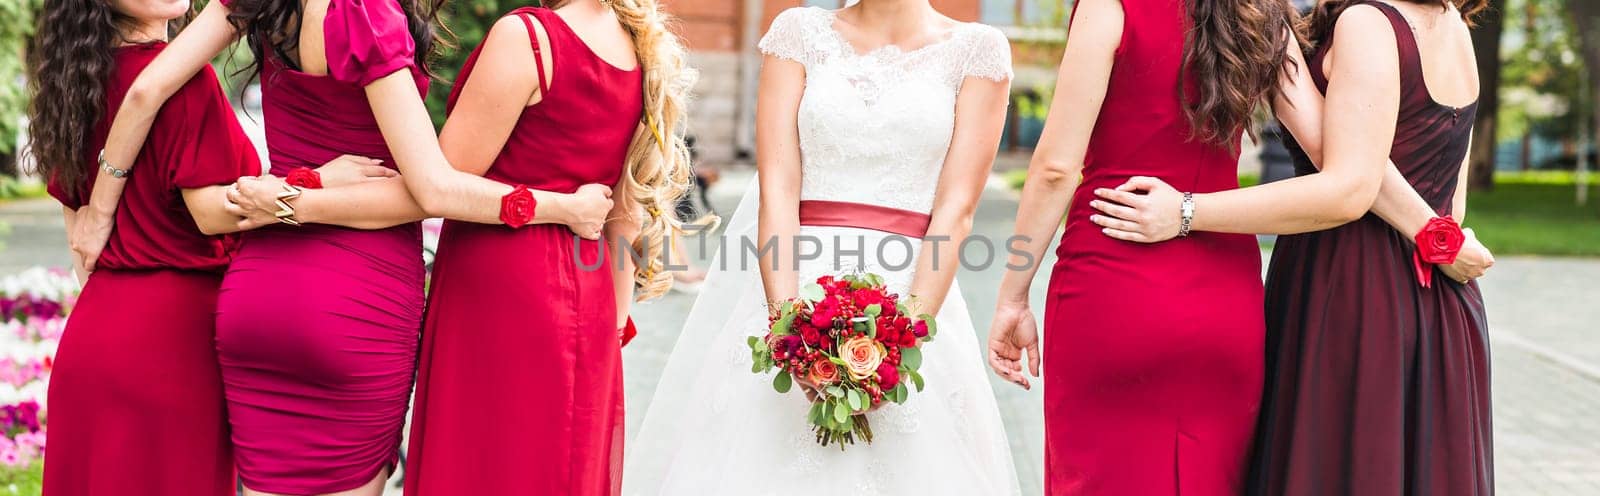 Beautiful bride and bridesmaids posing by Satura86